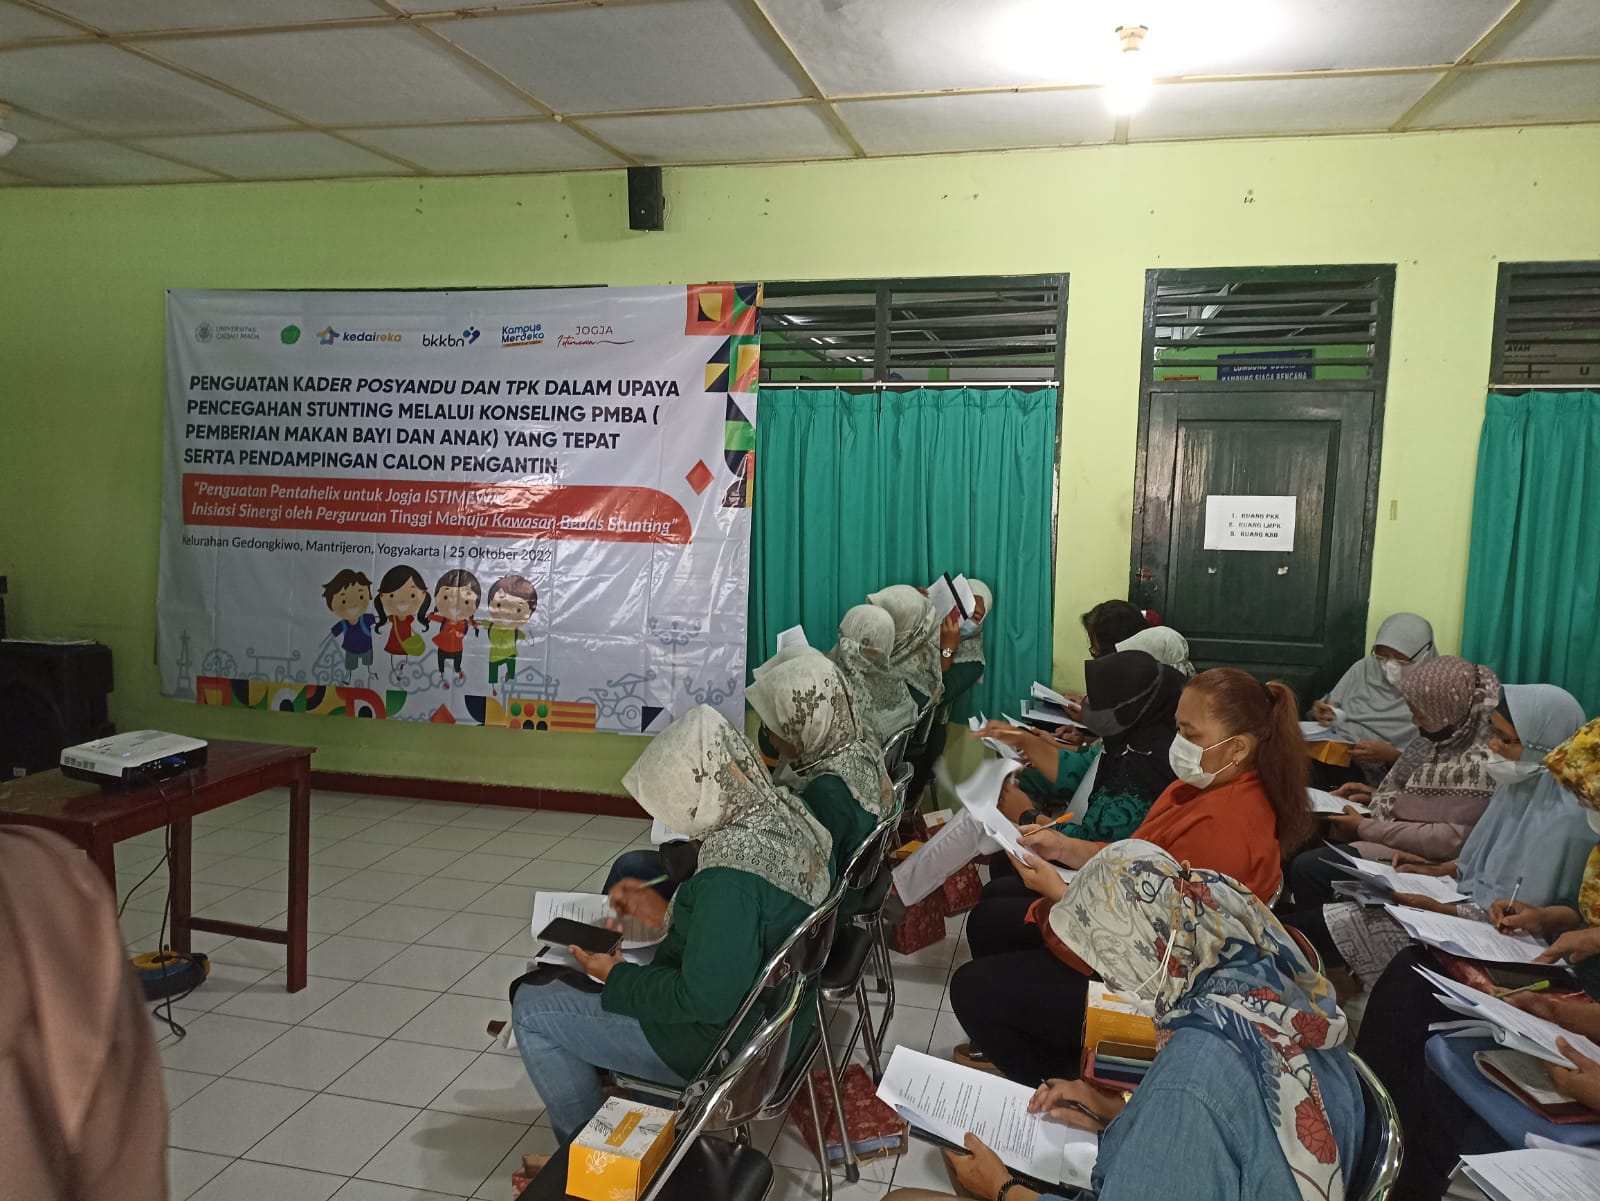 Dalam Upaya Pencegahan Stunting, Kelurahan Gedongkiwo Menyelenggarakan Sosialisasi Penguatan Kader Posyandu dan TPK